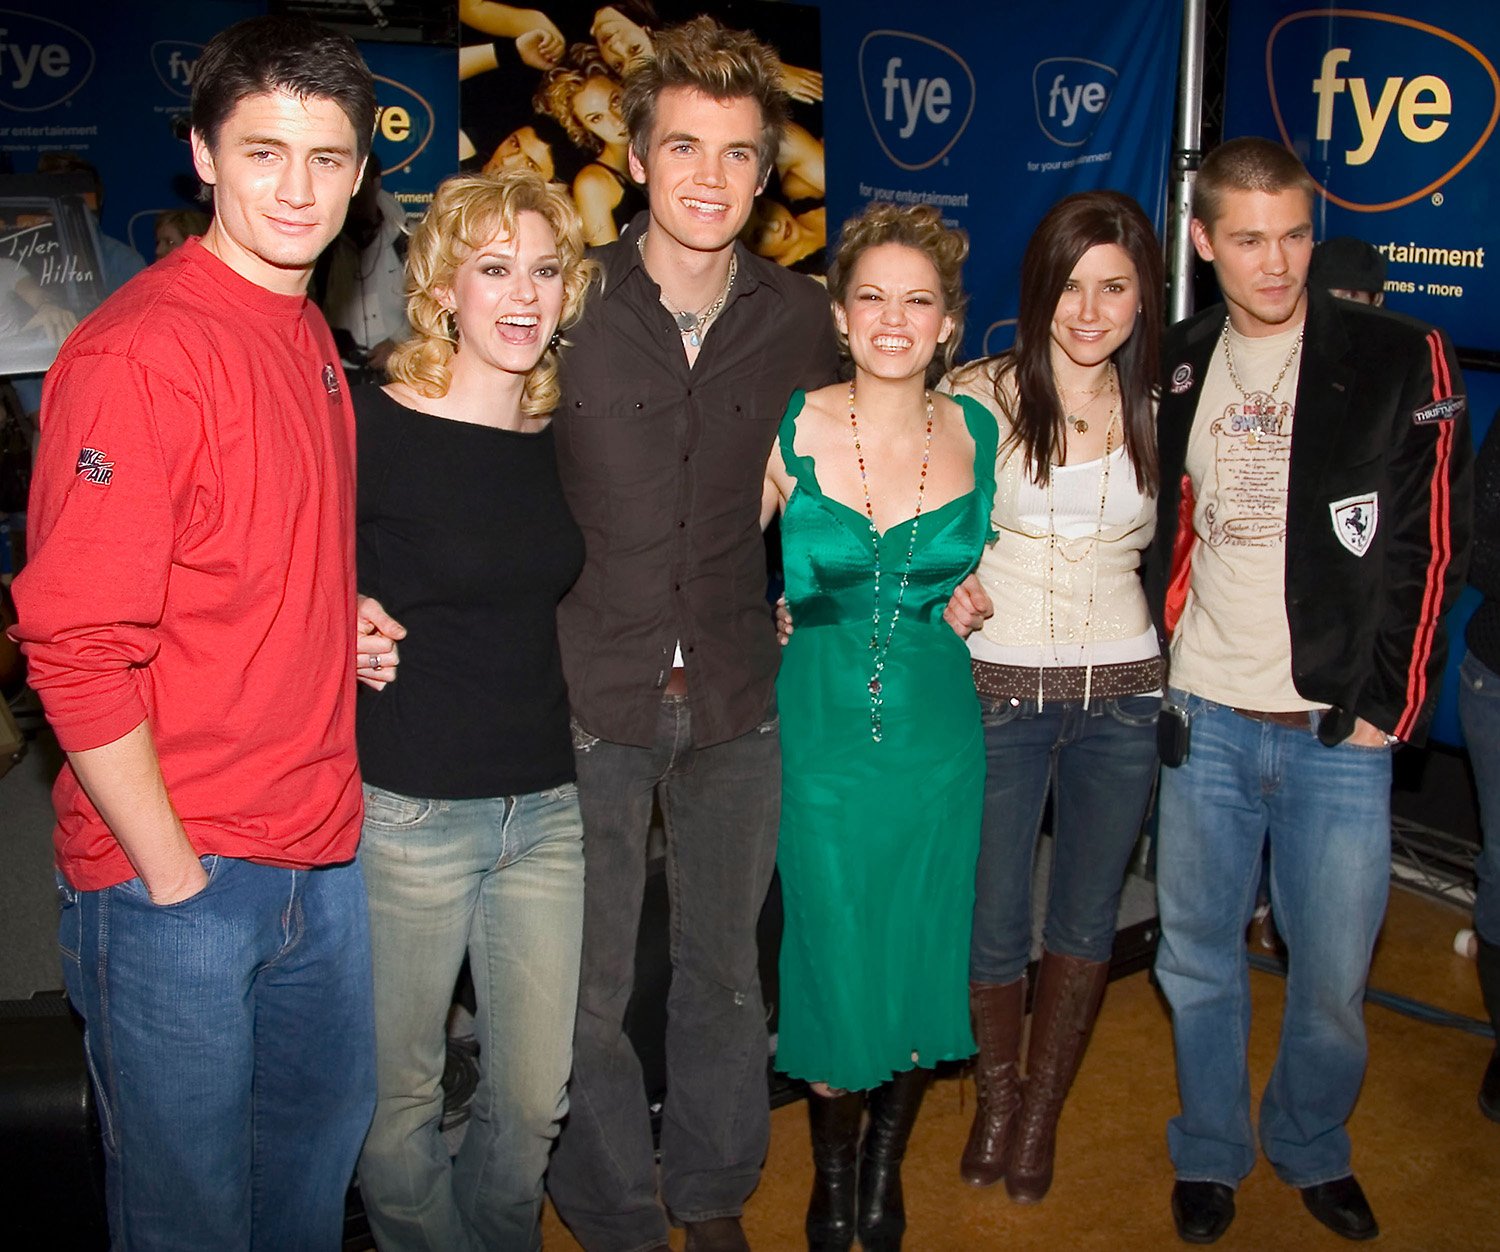 One Tree Hill stars James Lafferty, Hilarie Burton Morgan, Tyler Hilton, Bethany Joy Lenz, Sophia Bush, and Chad Michael Murray at FYE in 2004